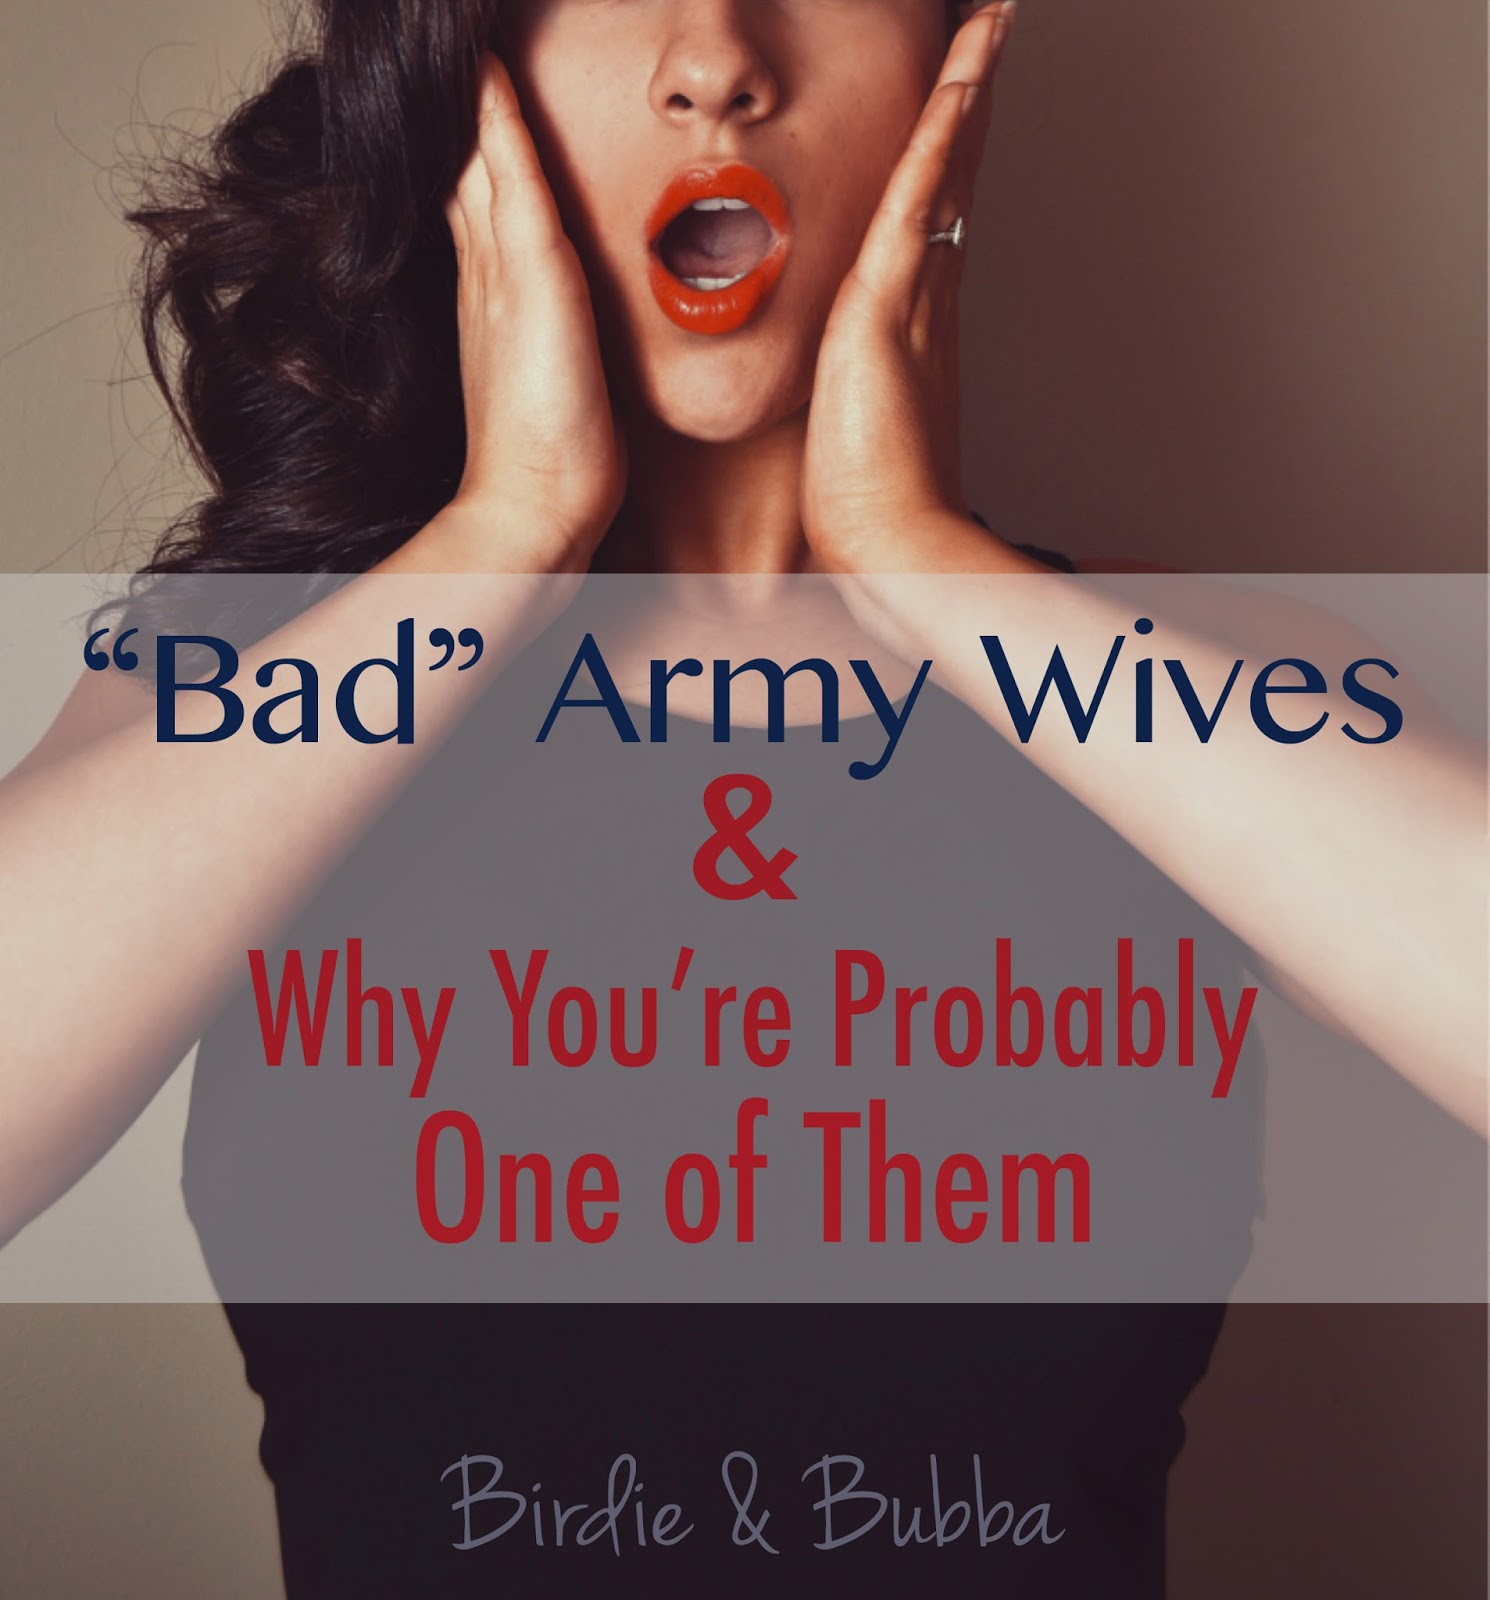 Bad wives